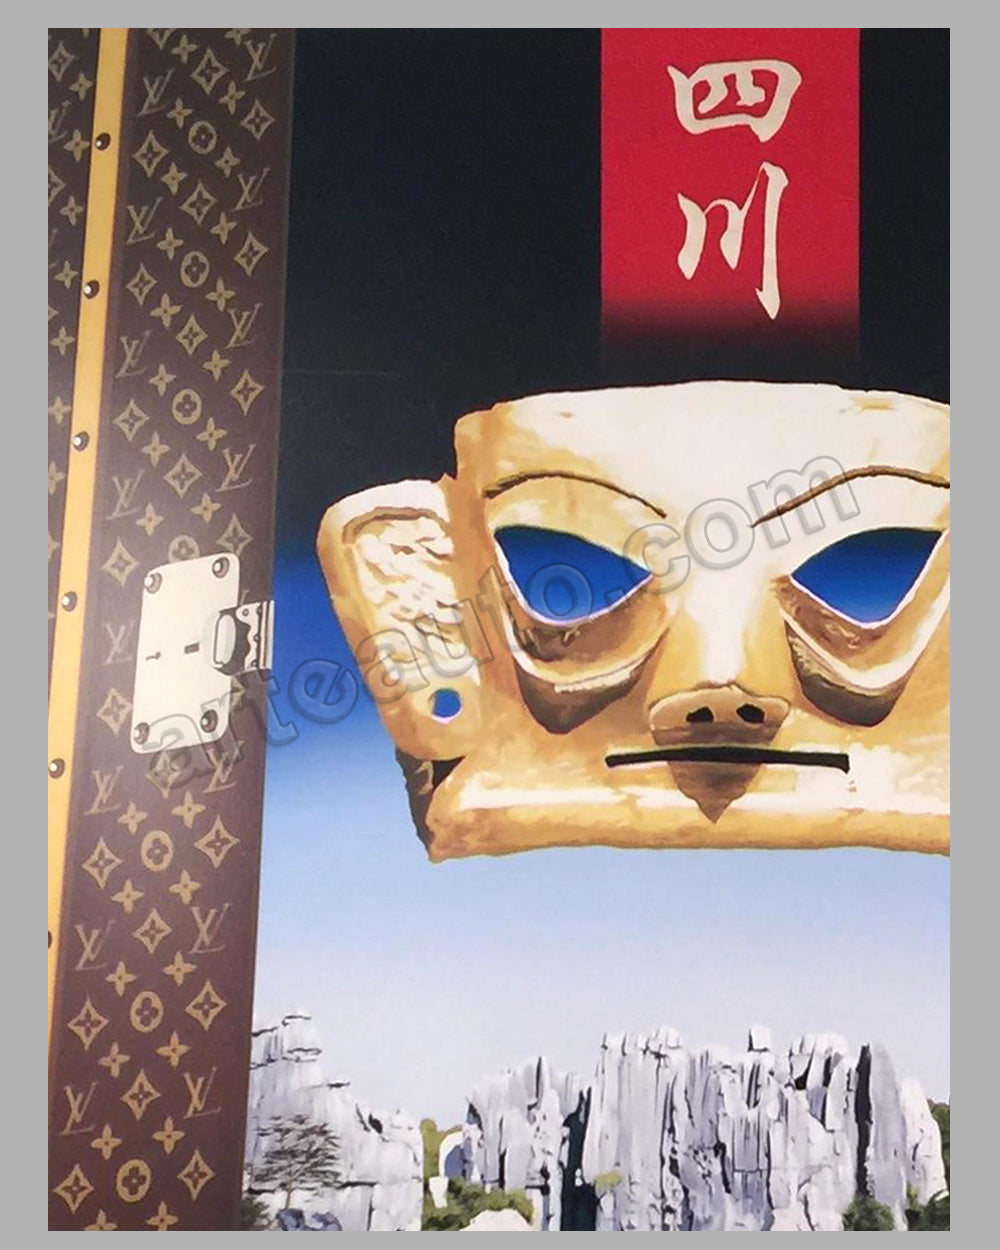 Razzia, Original Louis Vuitton Classic Poster, China Run, Beijing-Dalian,  1998 at 1stDibs